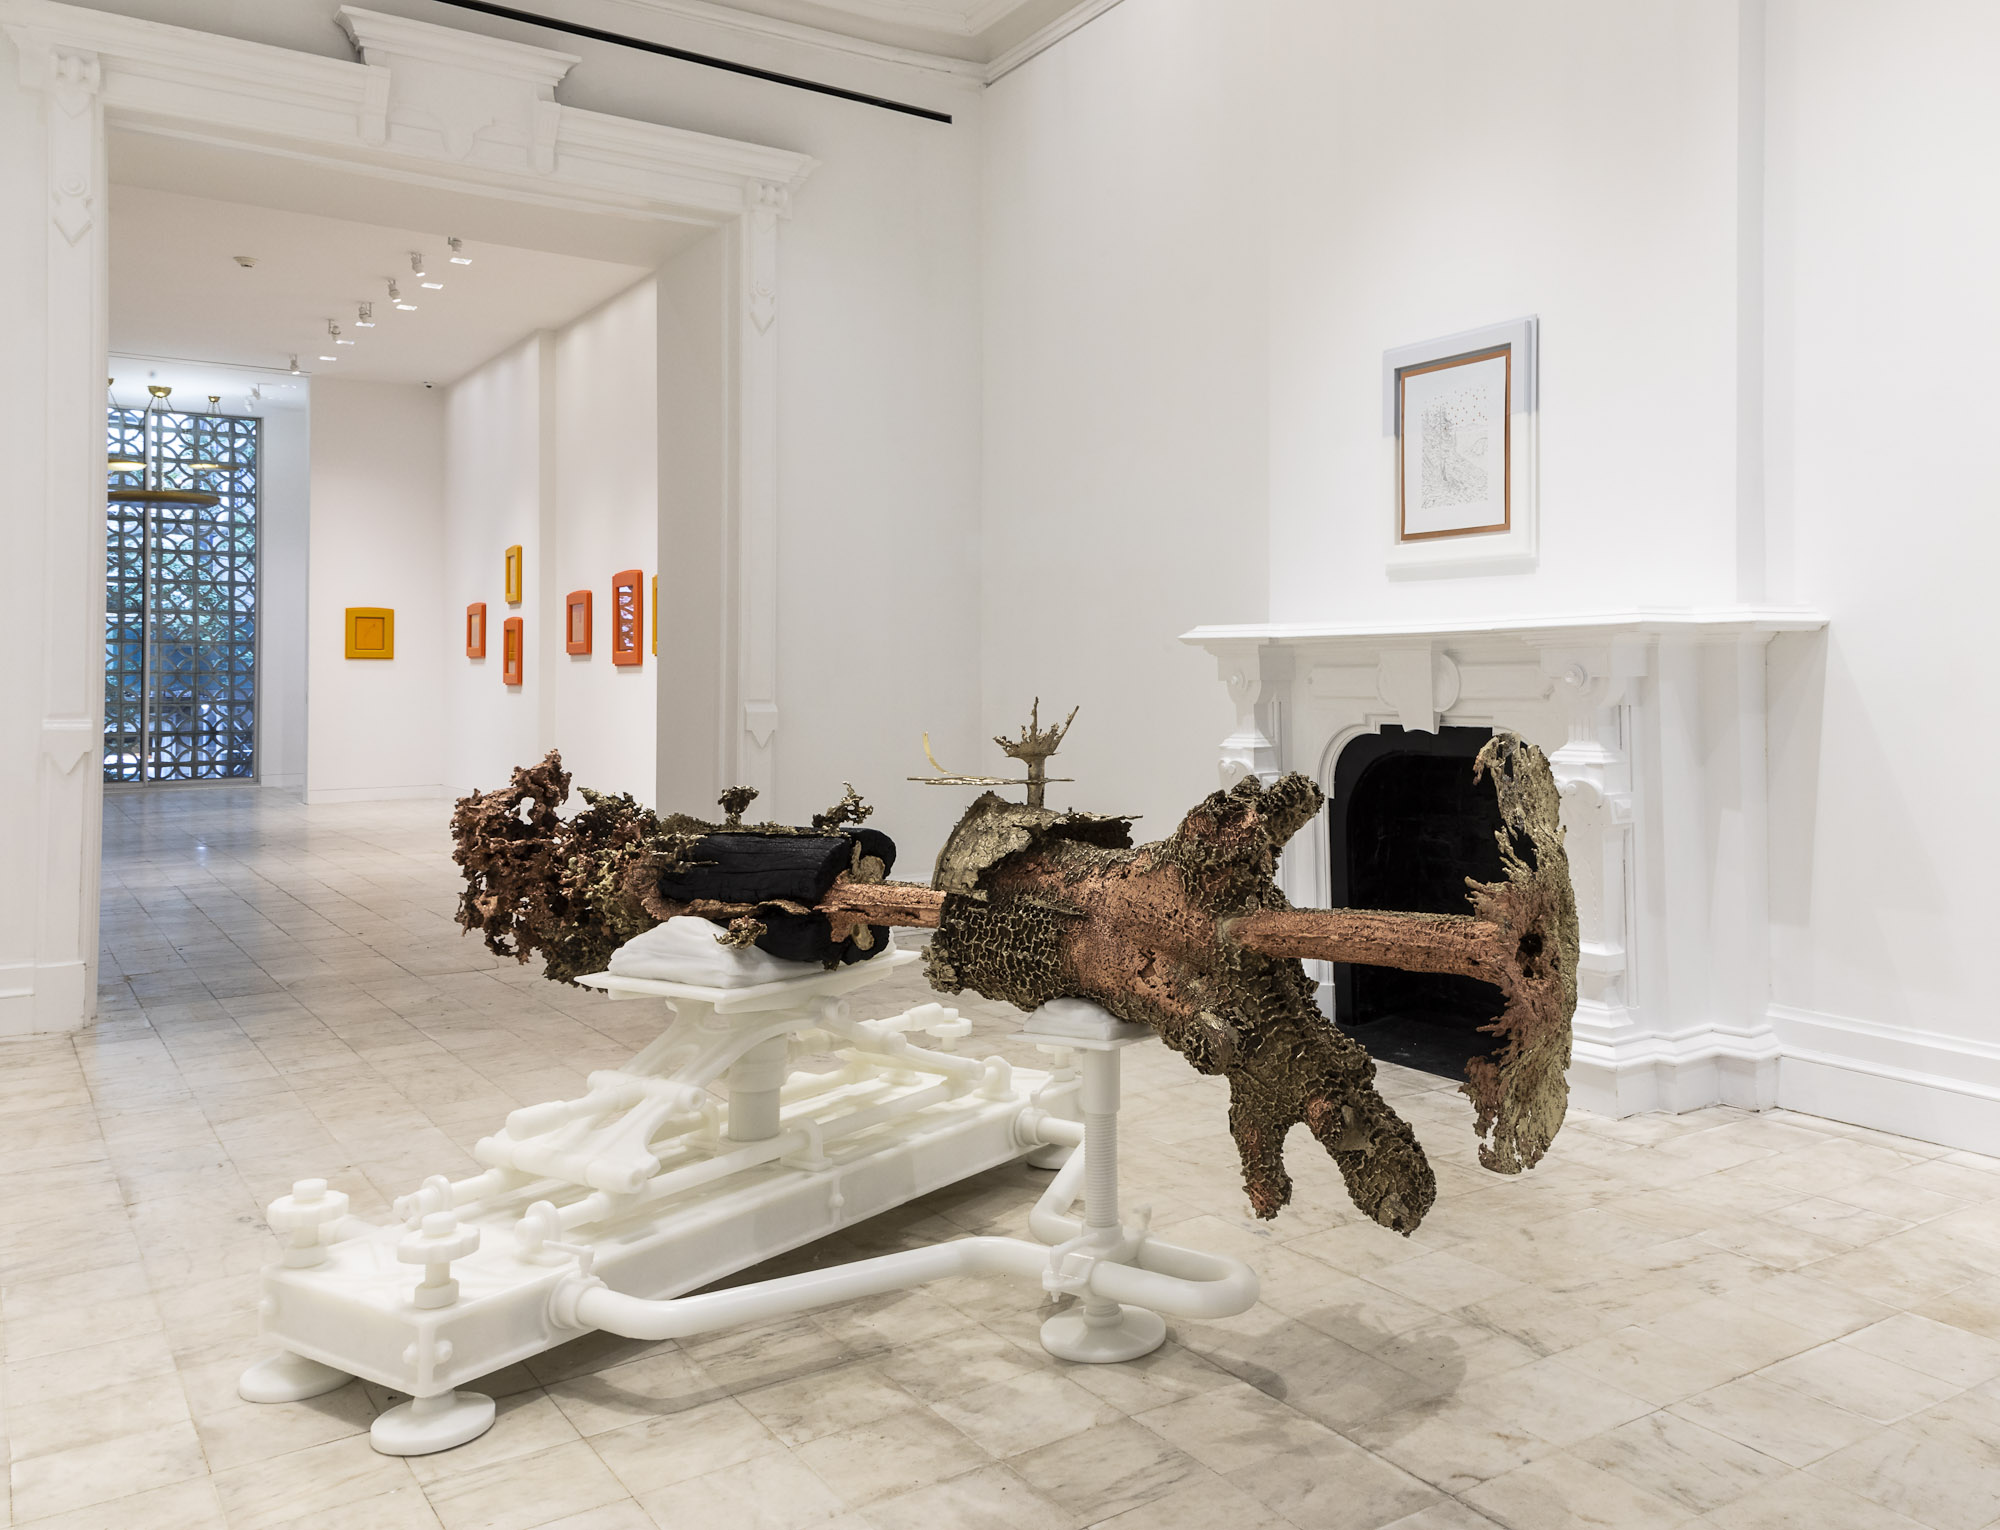 Installation view, Matthew Barney: <i>Embrasure</i>, at Gladstone 64, 2019. 